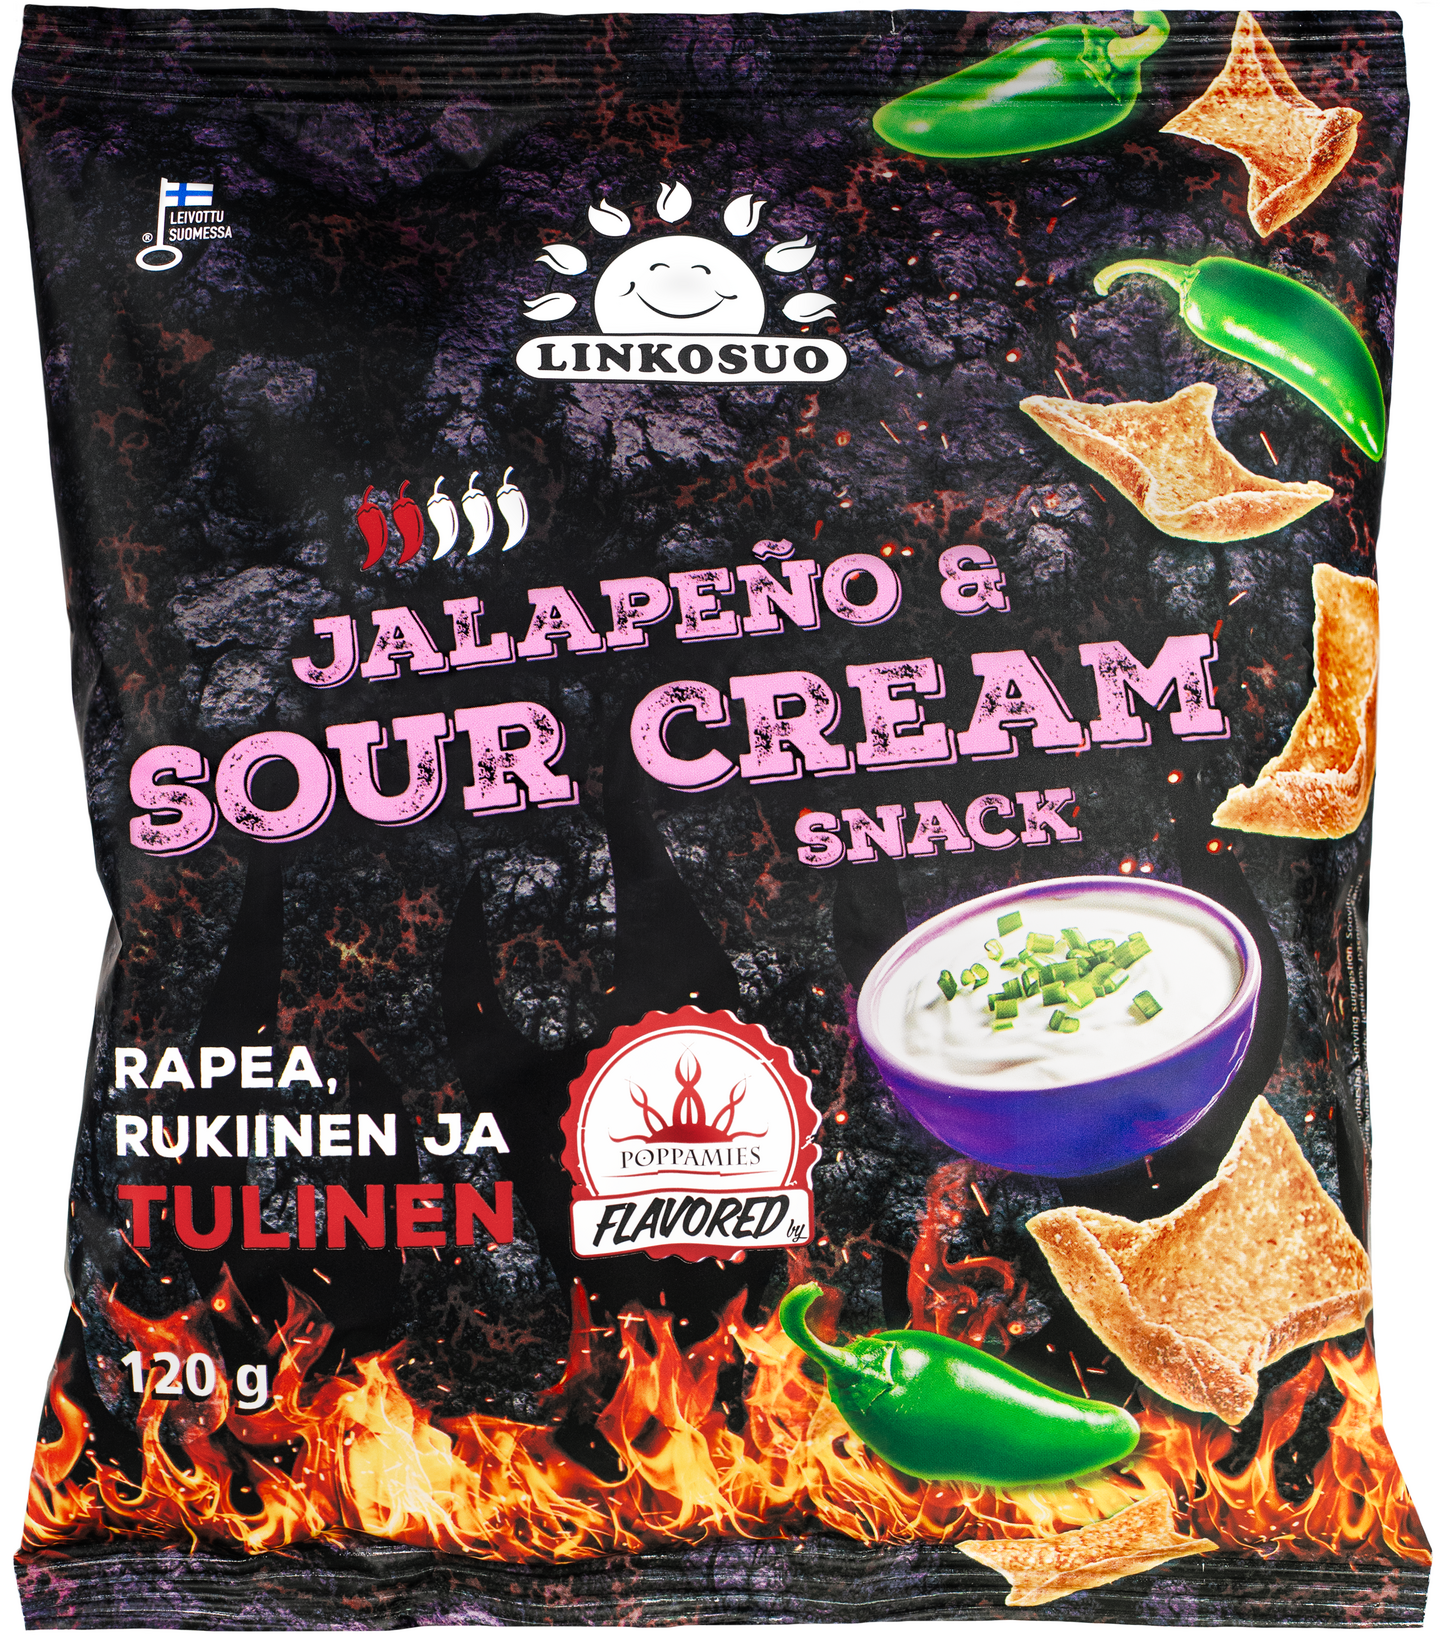 Linkosuo x Poppamies snack 120g jalapeno-sour